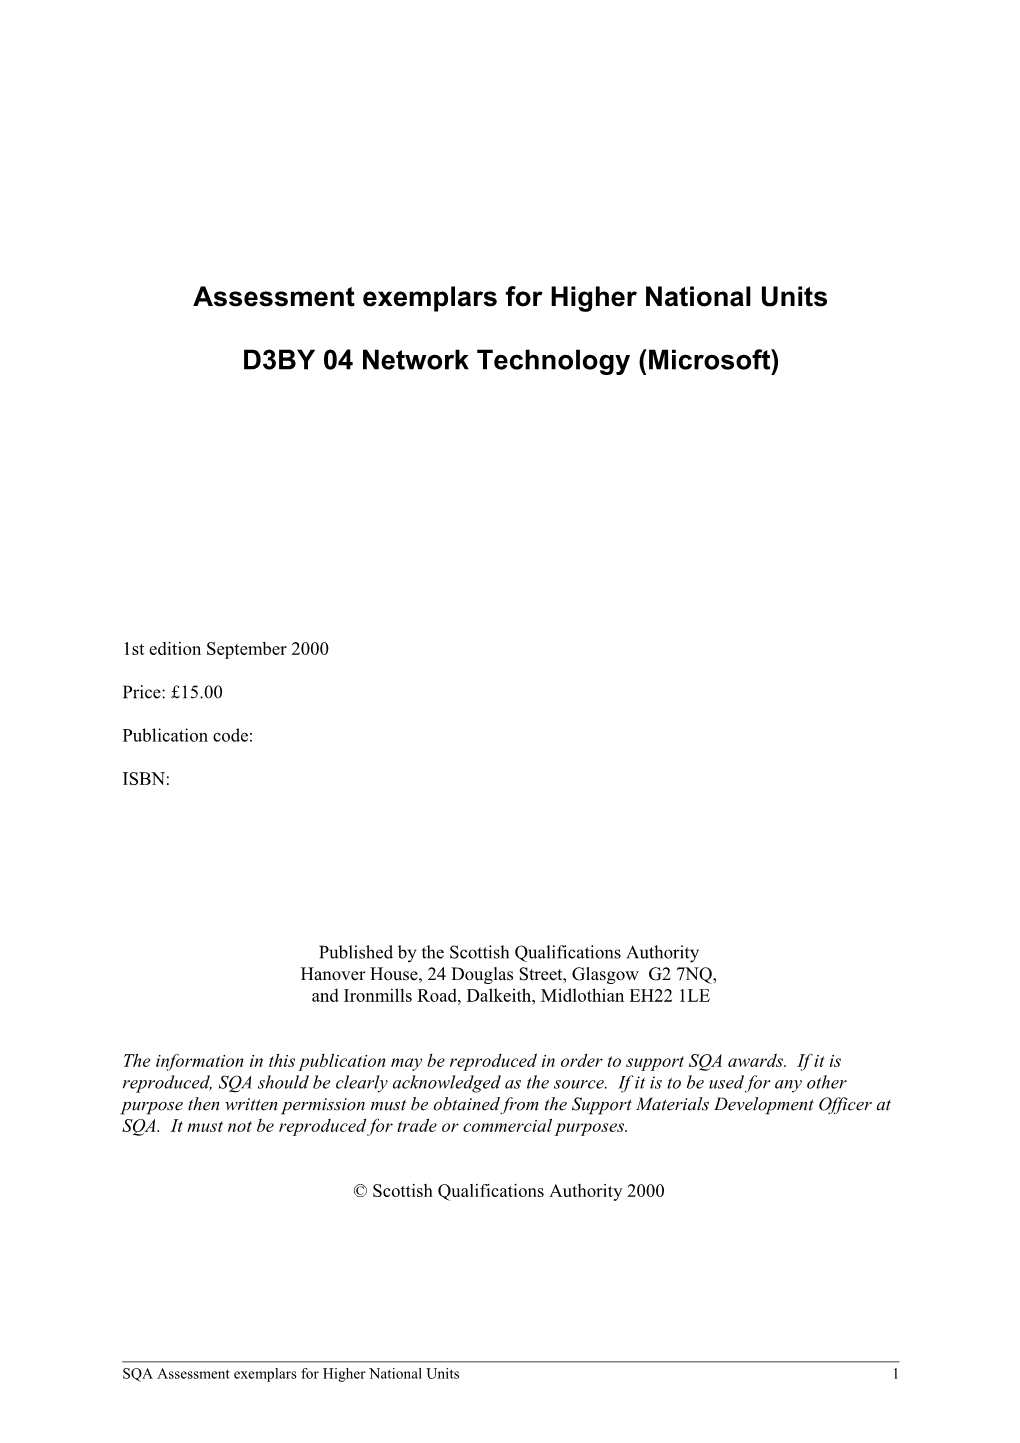 Assessment Exemplars for Higher National Units